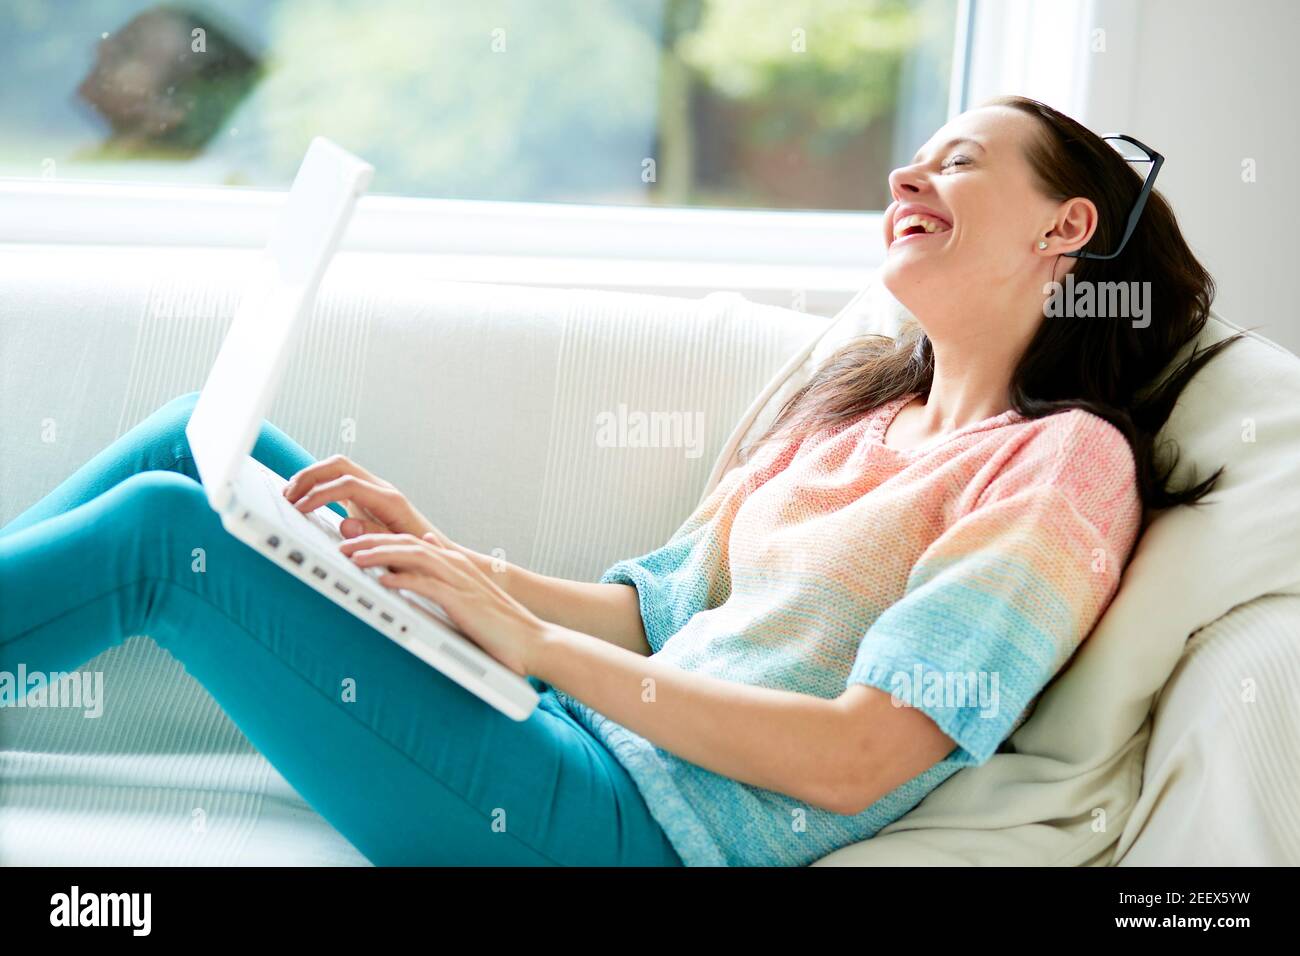 Woman smiling using laptop Stock Photo